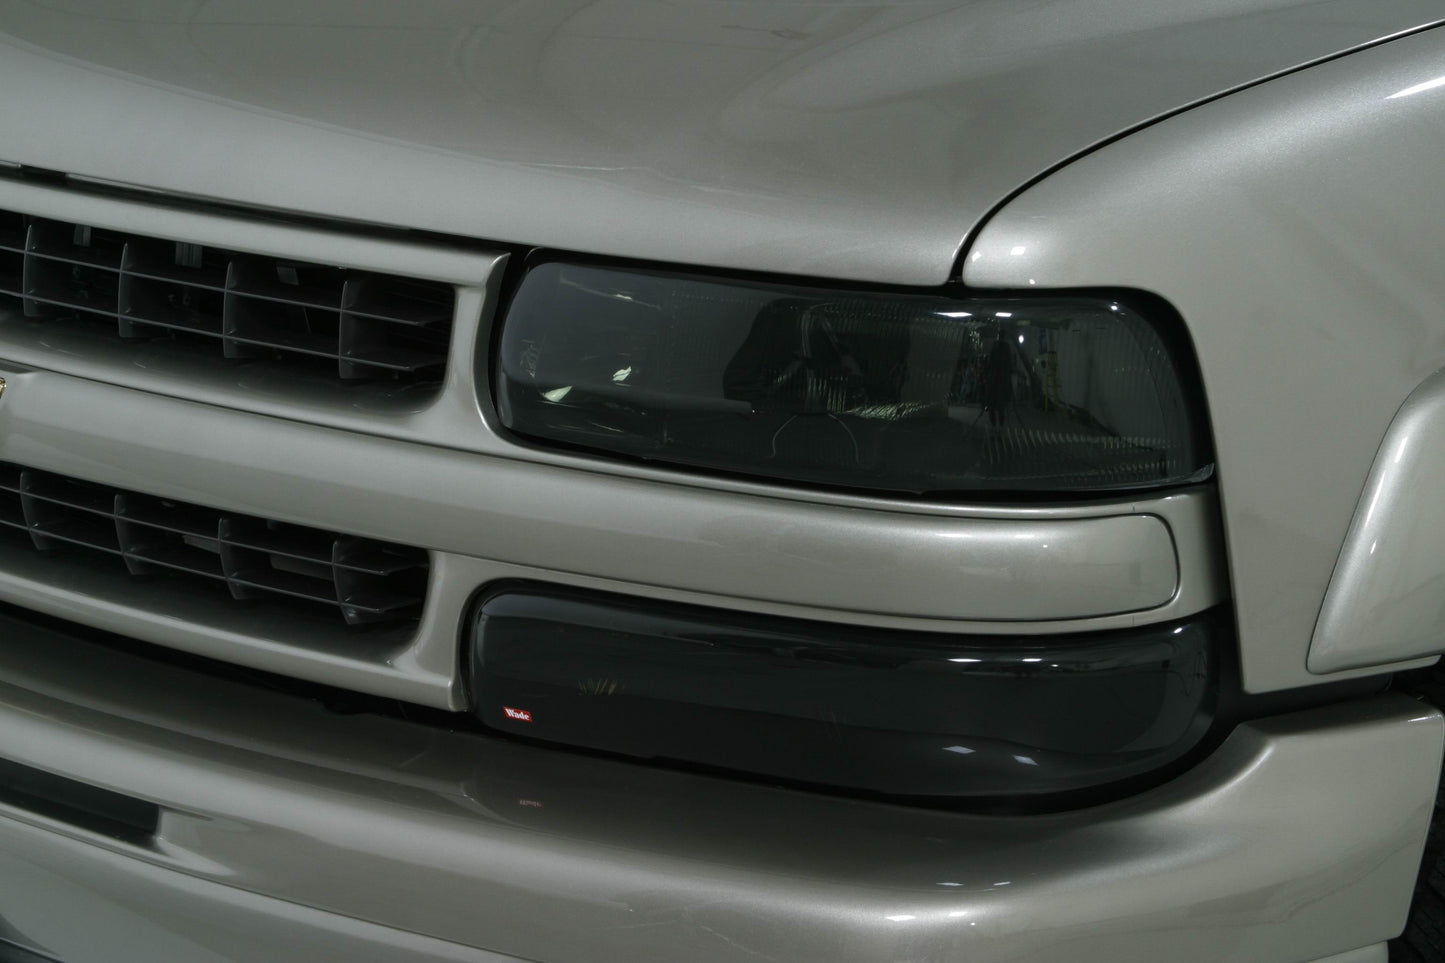 1997 Toyota Tercel Head Light Covers